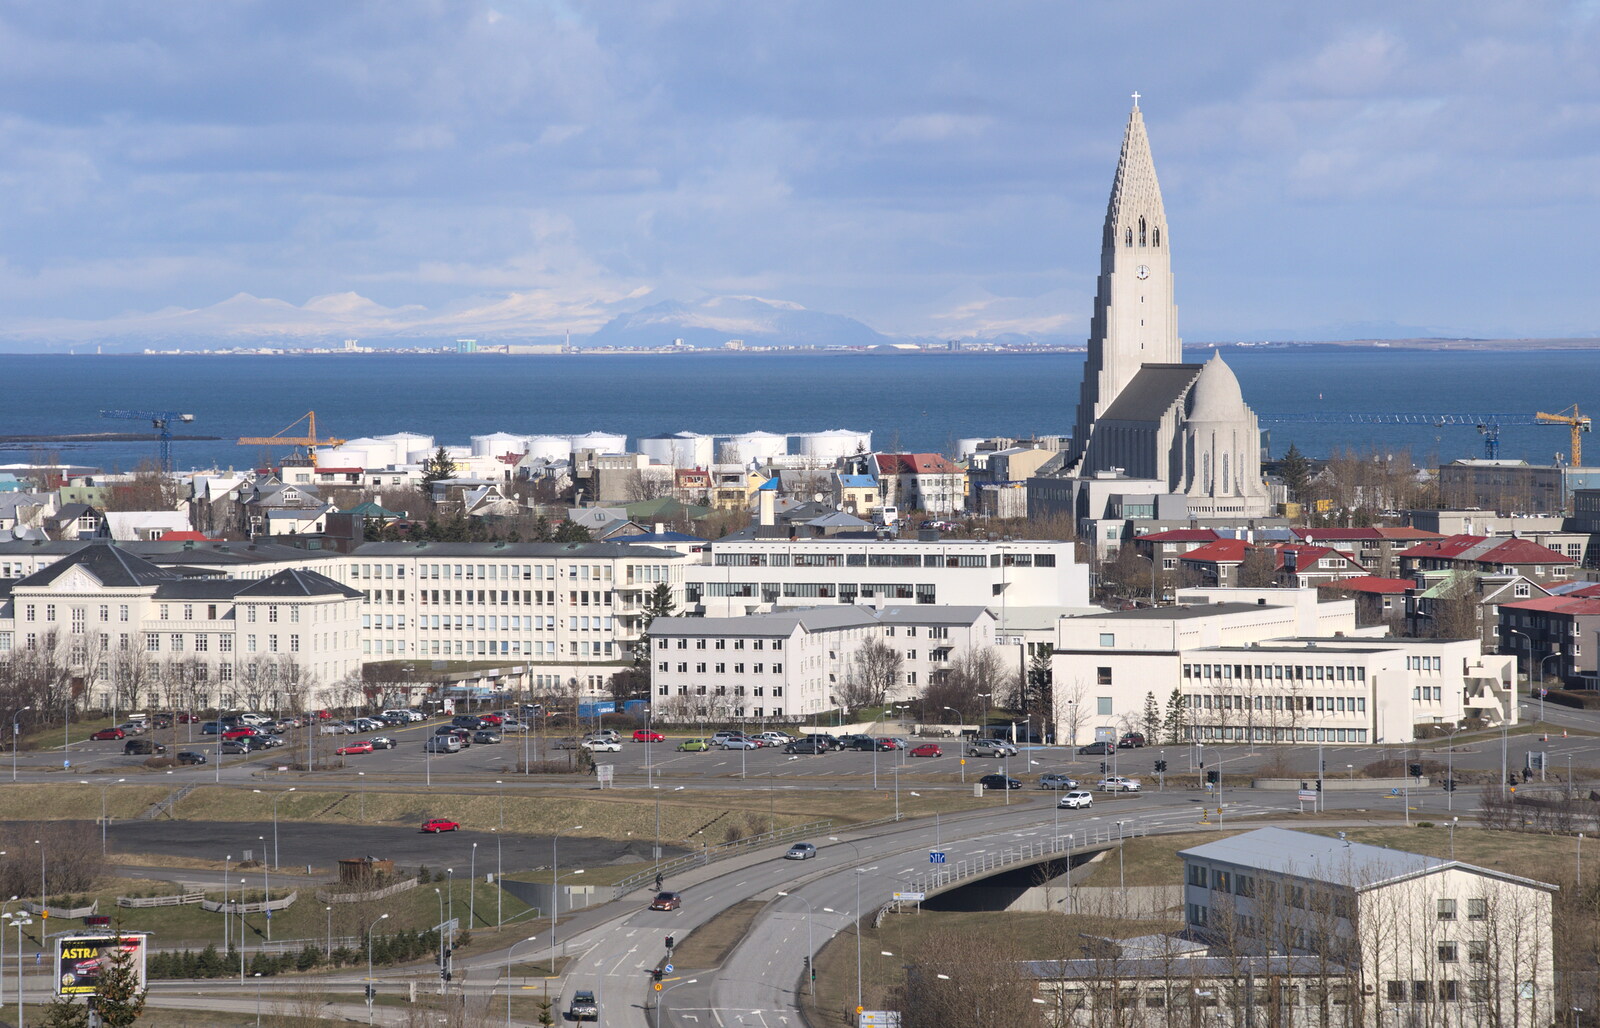 Hallgrímskirkja dominates the skyline of the city from Stríðsminjar War Relics, Perlan and Street Art, Reykjavik, Iceland - 23rd April 2017